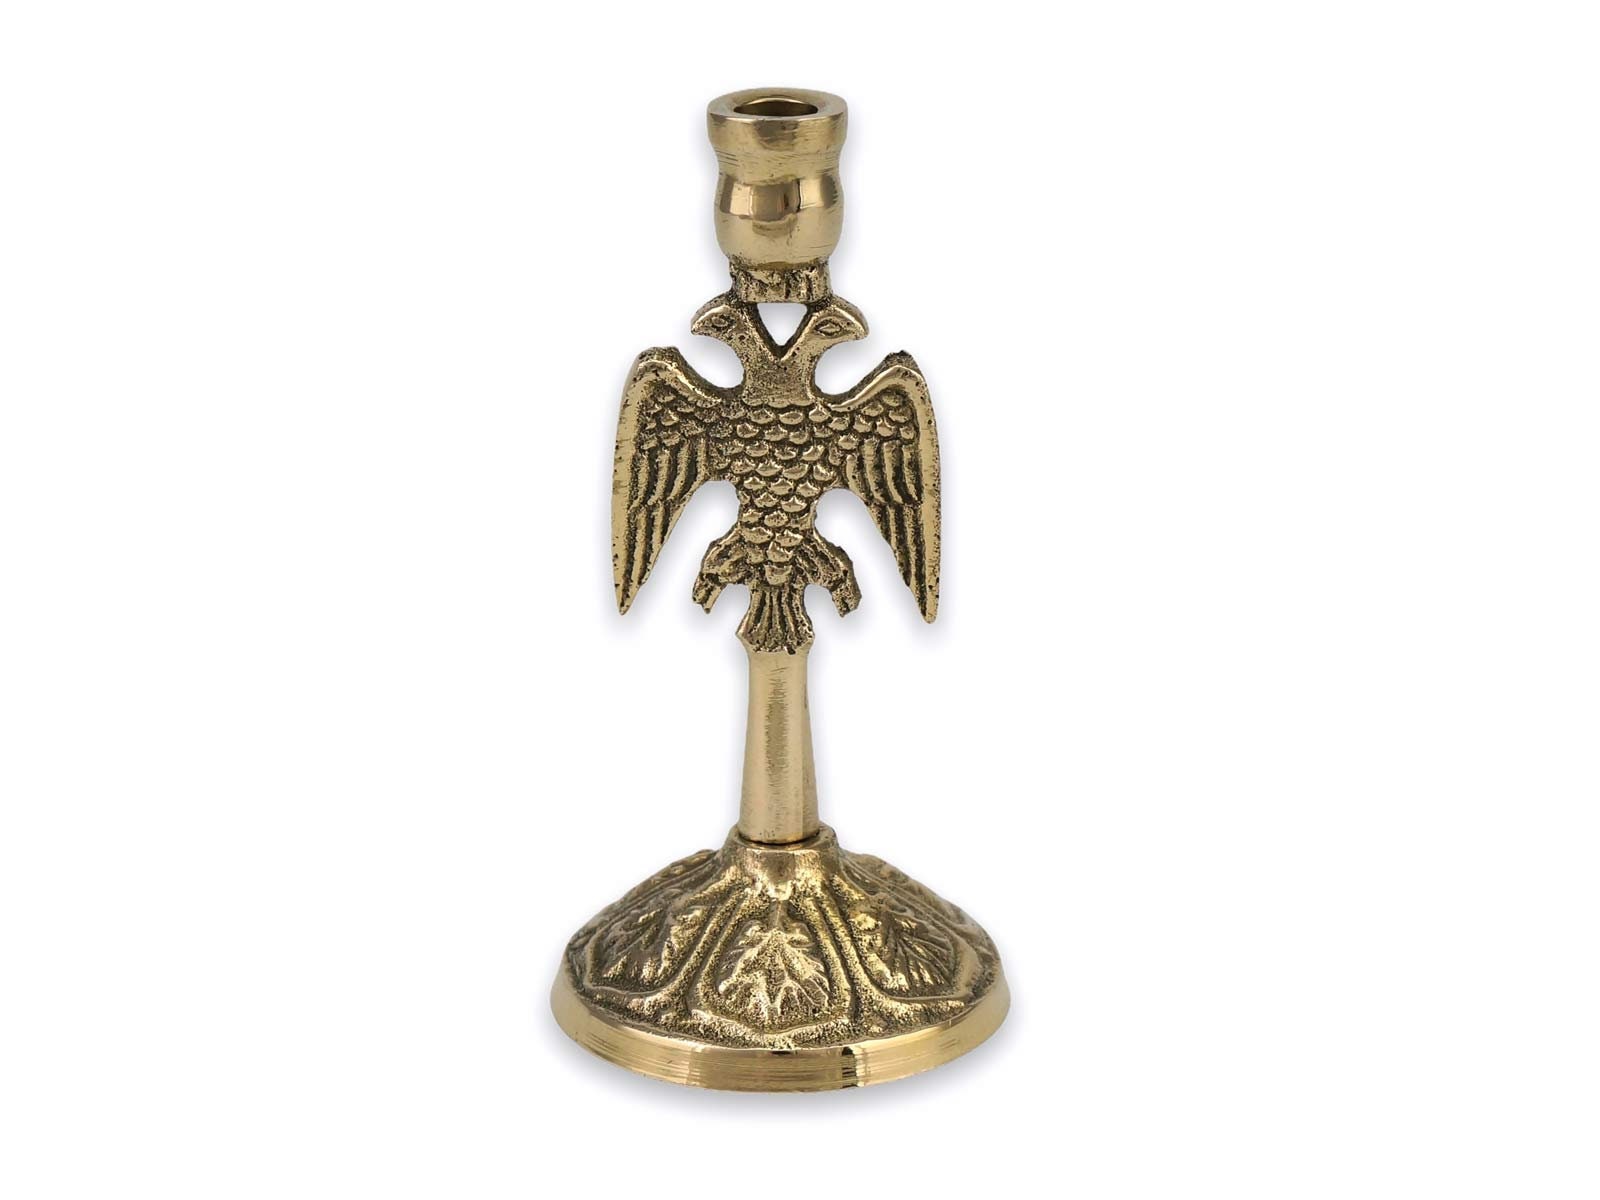 Byzantine Style Double Headed Eagle Brass Candelabra Church Three Candle Holder 